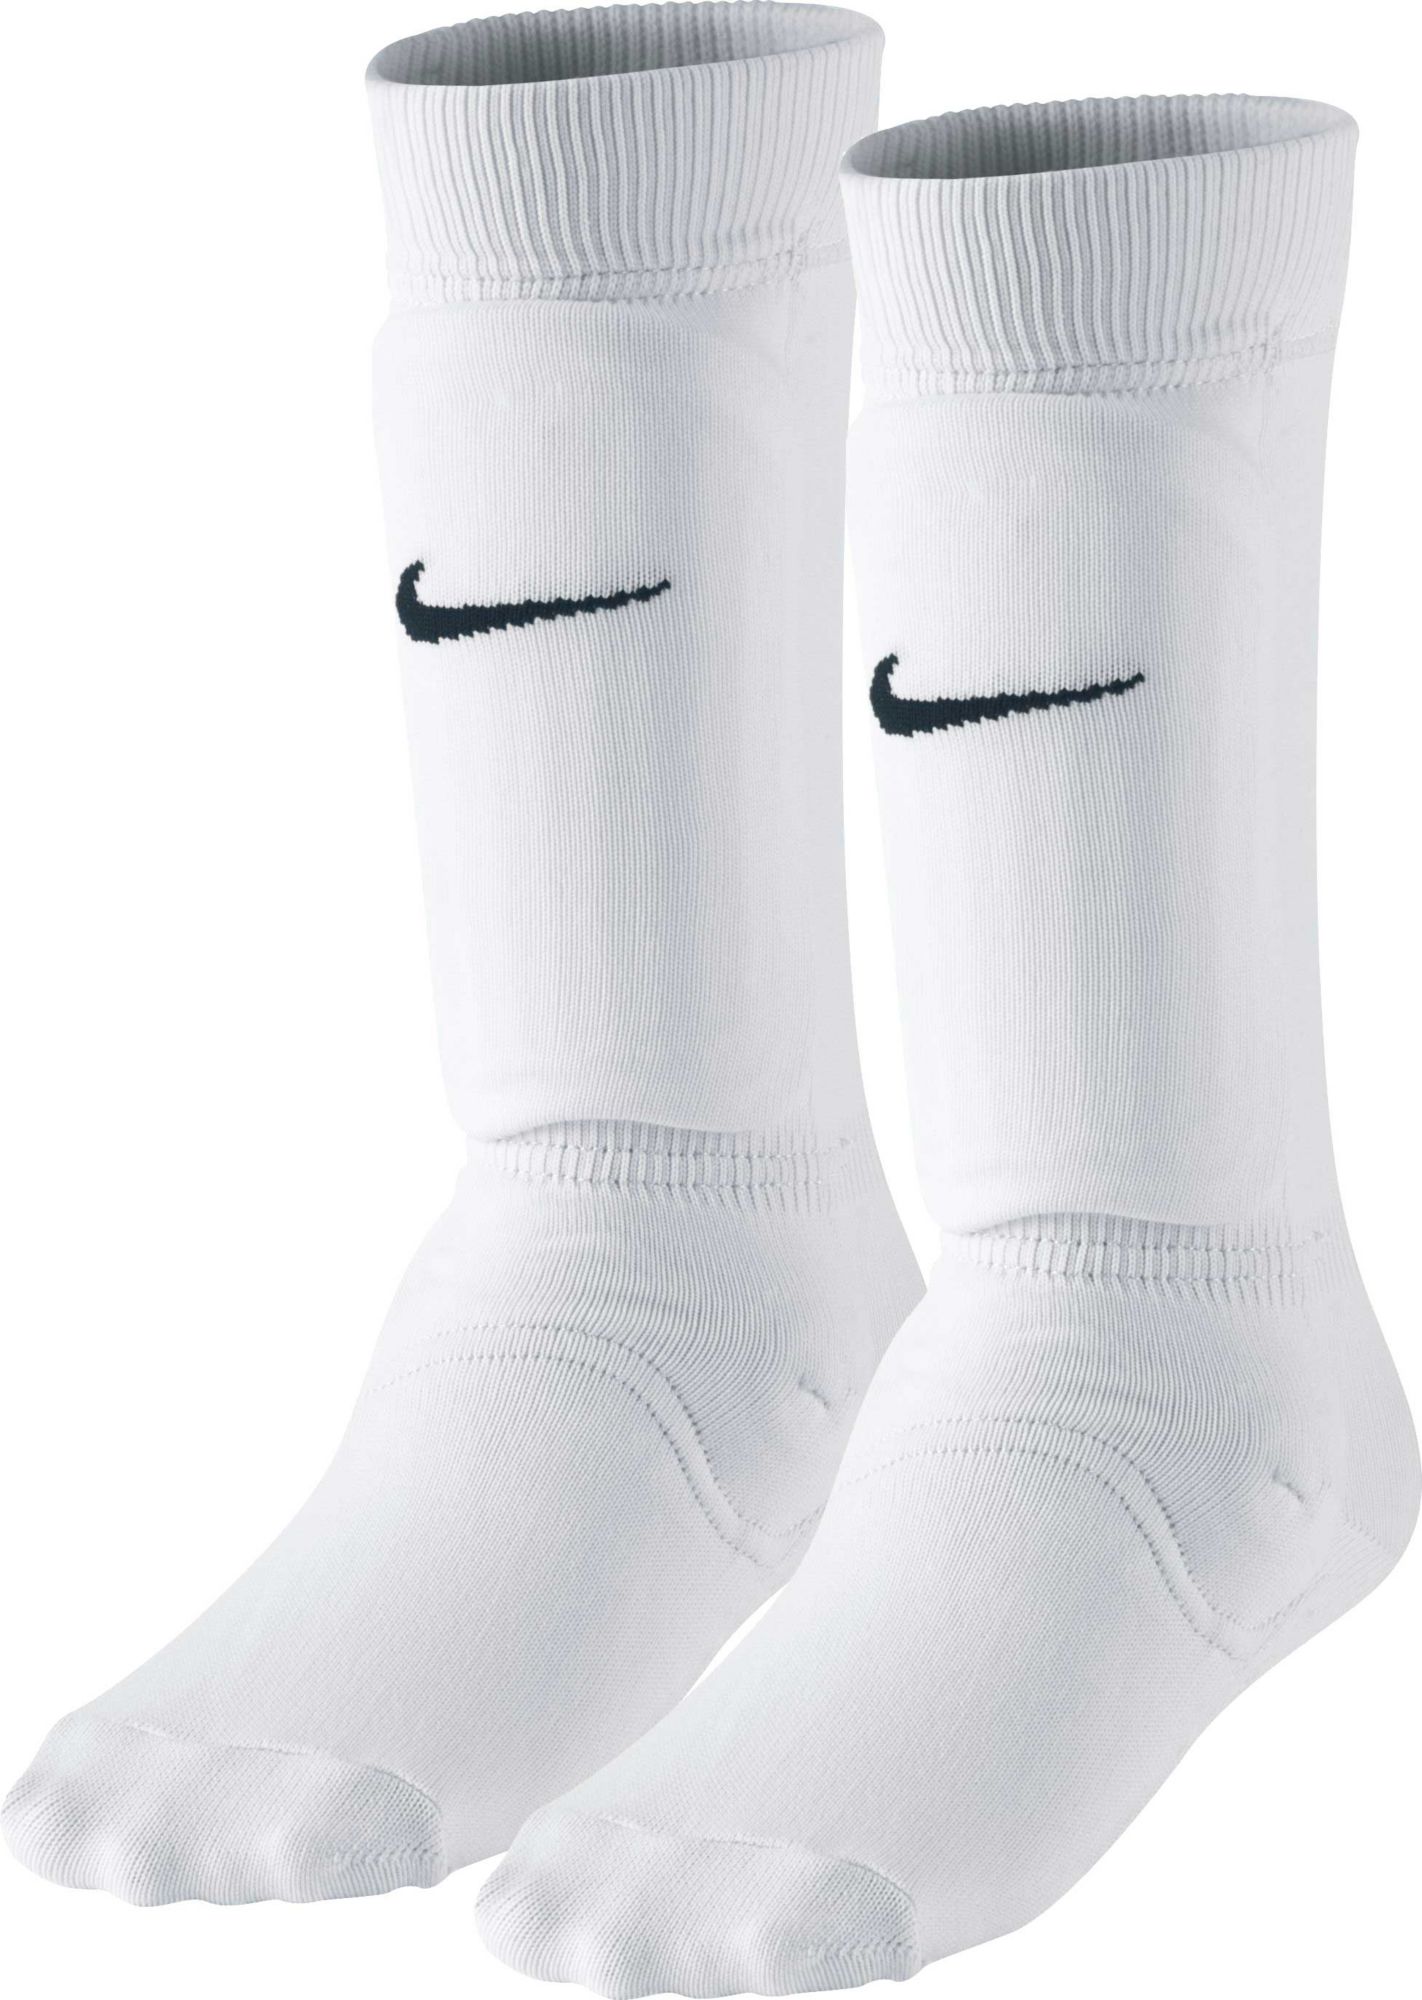 nike youth soccer shin socks